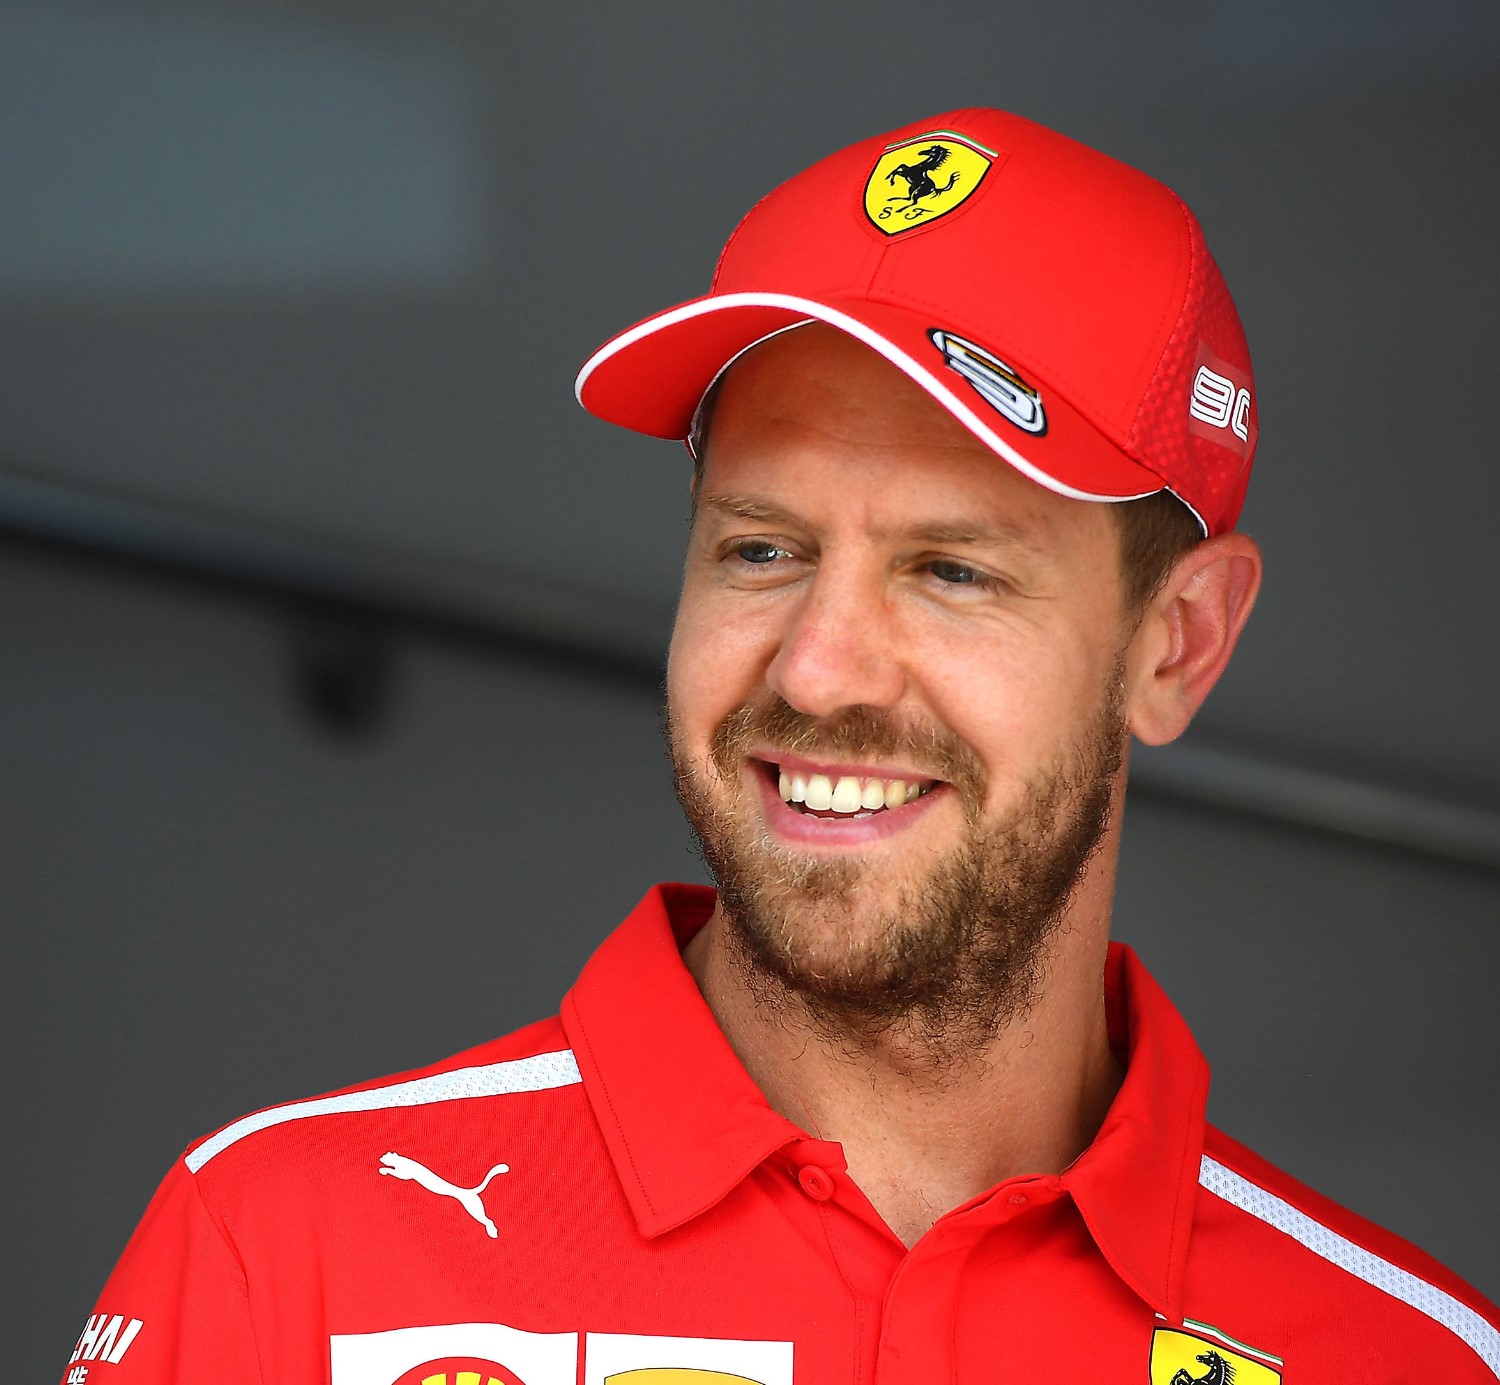 Vettel in good mood at Paul Ricard